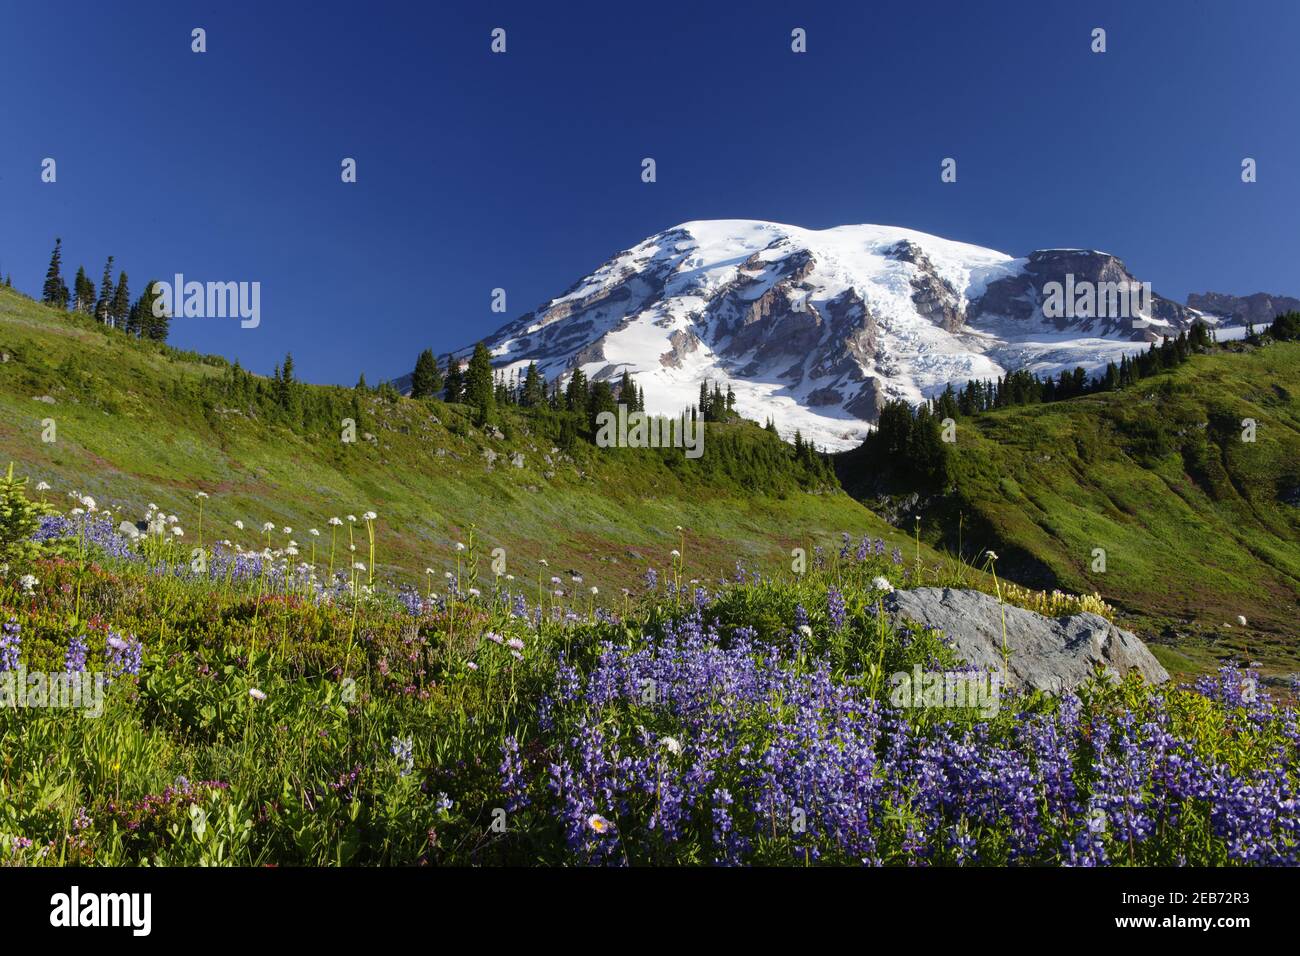 Mount Rainier and alpine meadowsParadise Mount Rainier NP Washington State, USA LA001298 Stock Photo